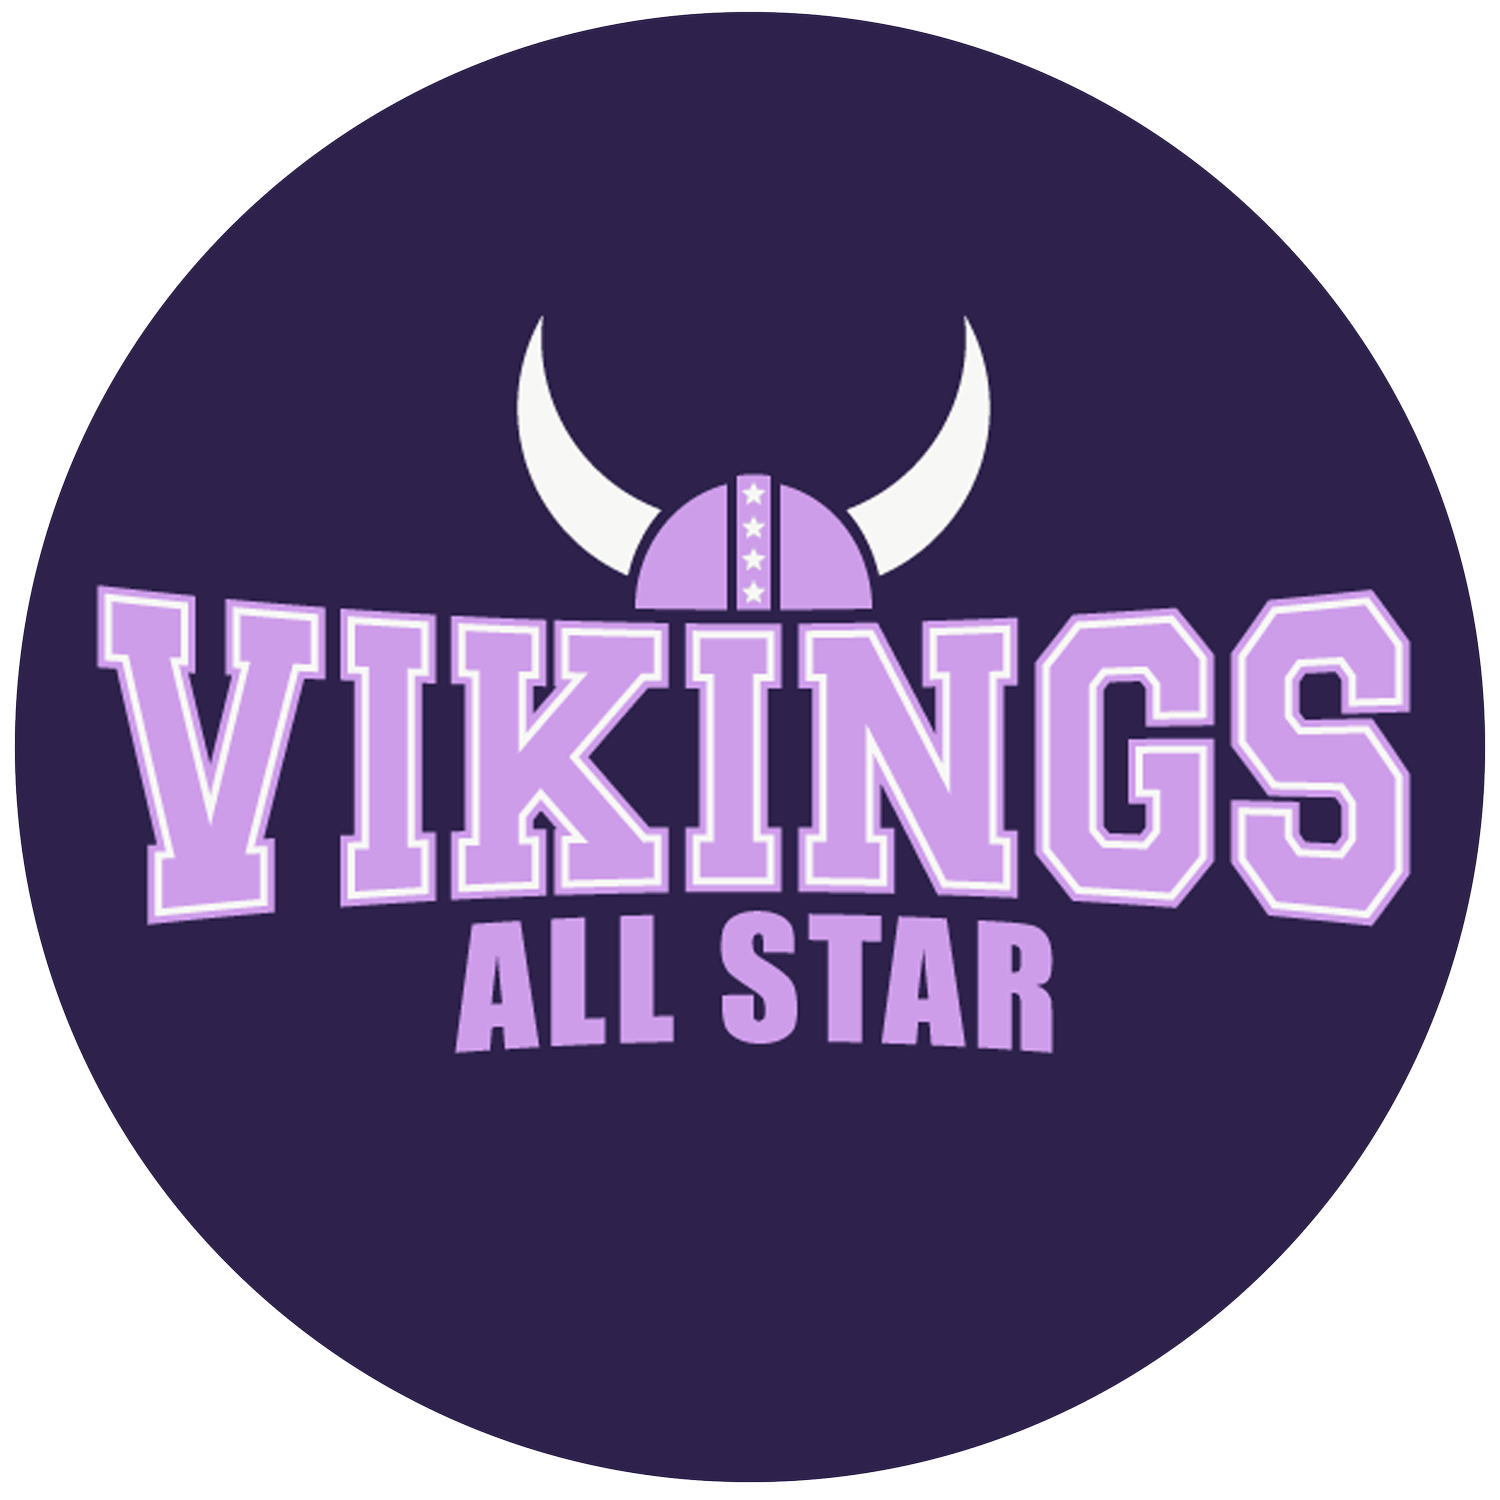 Vikings All Star